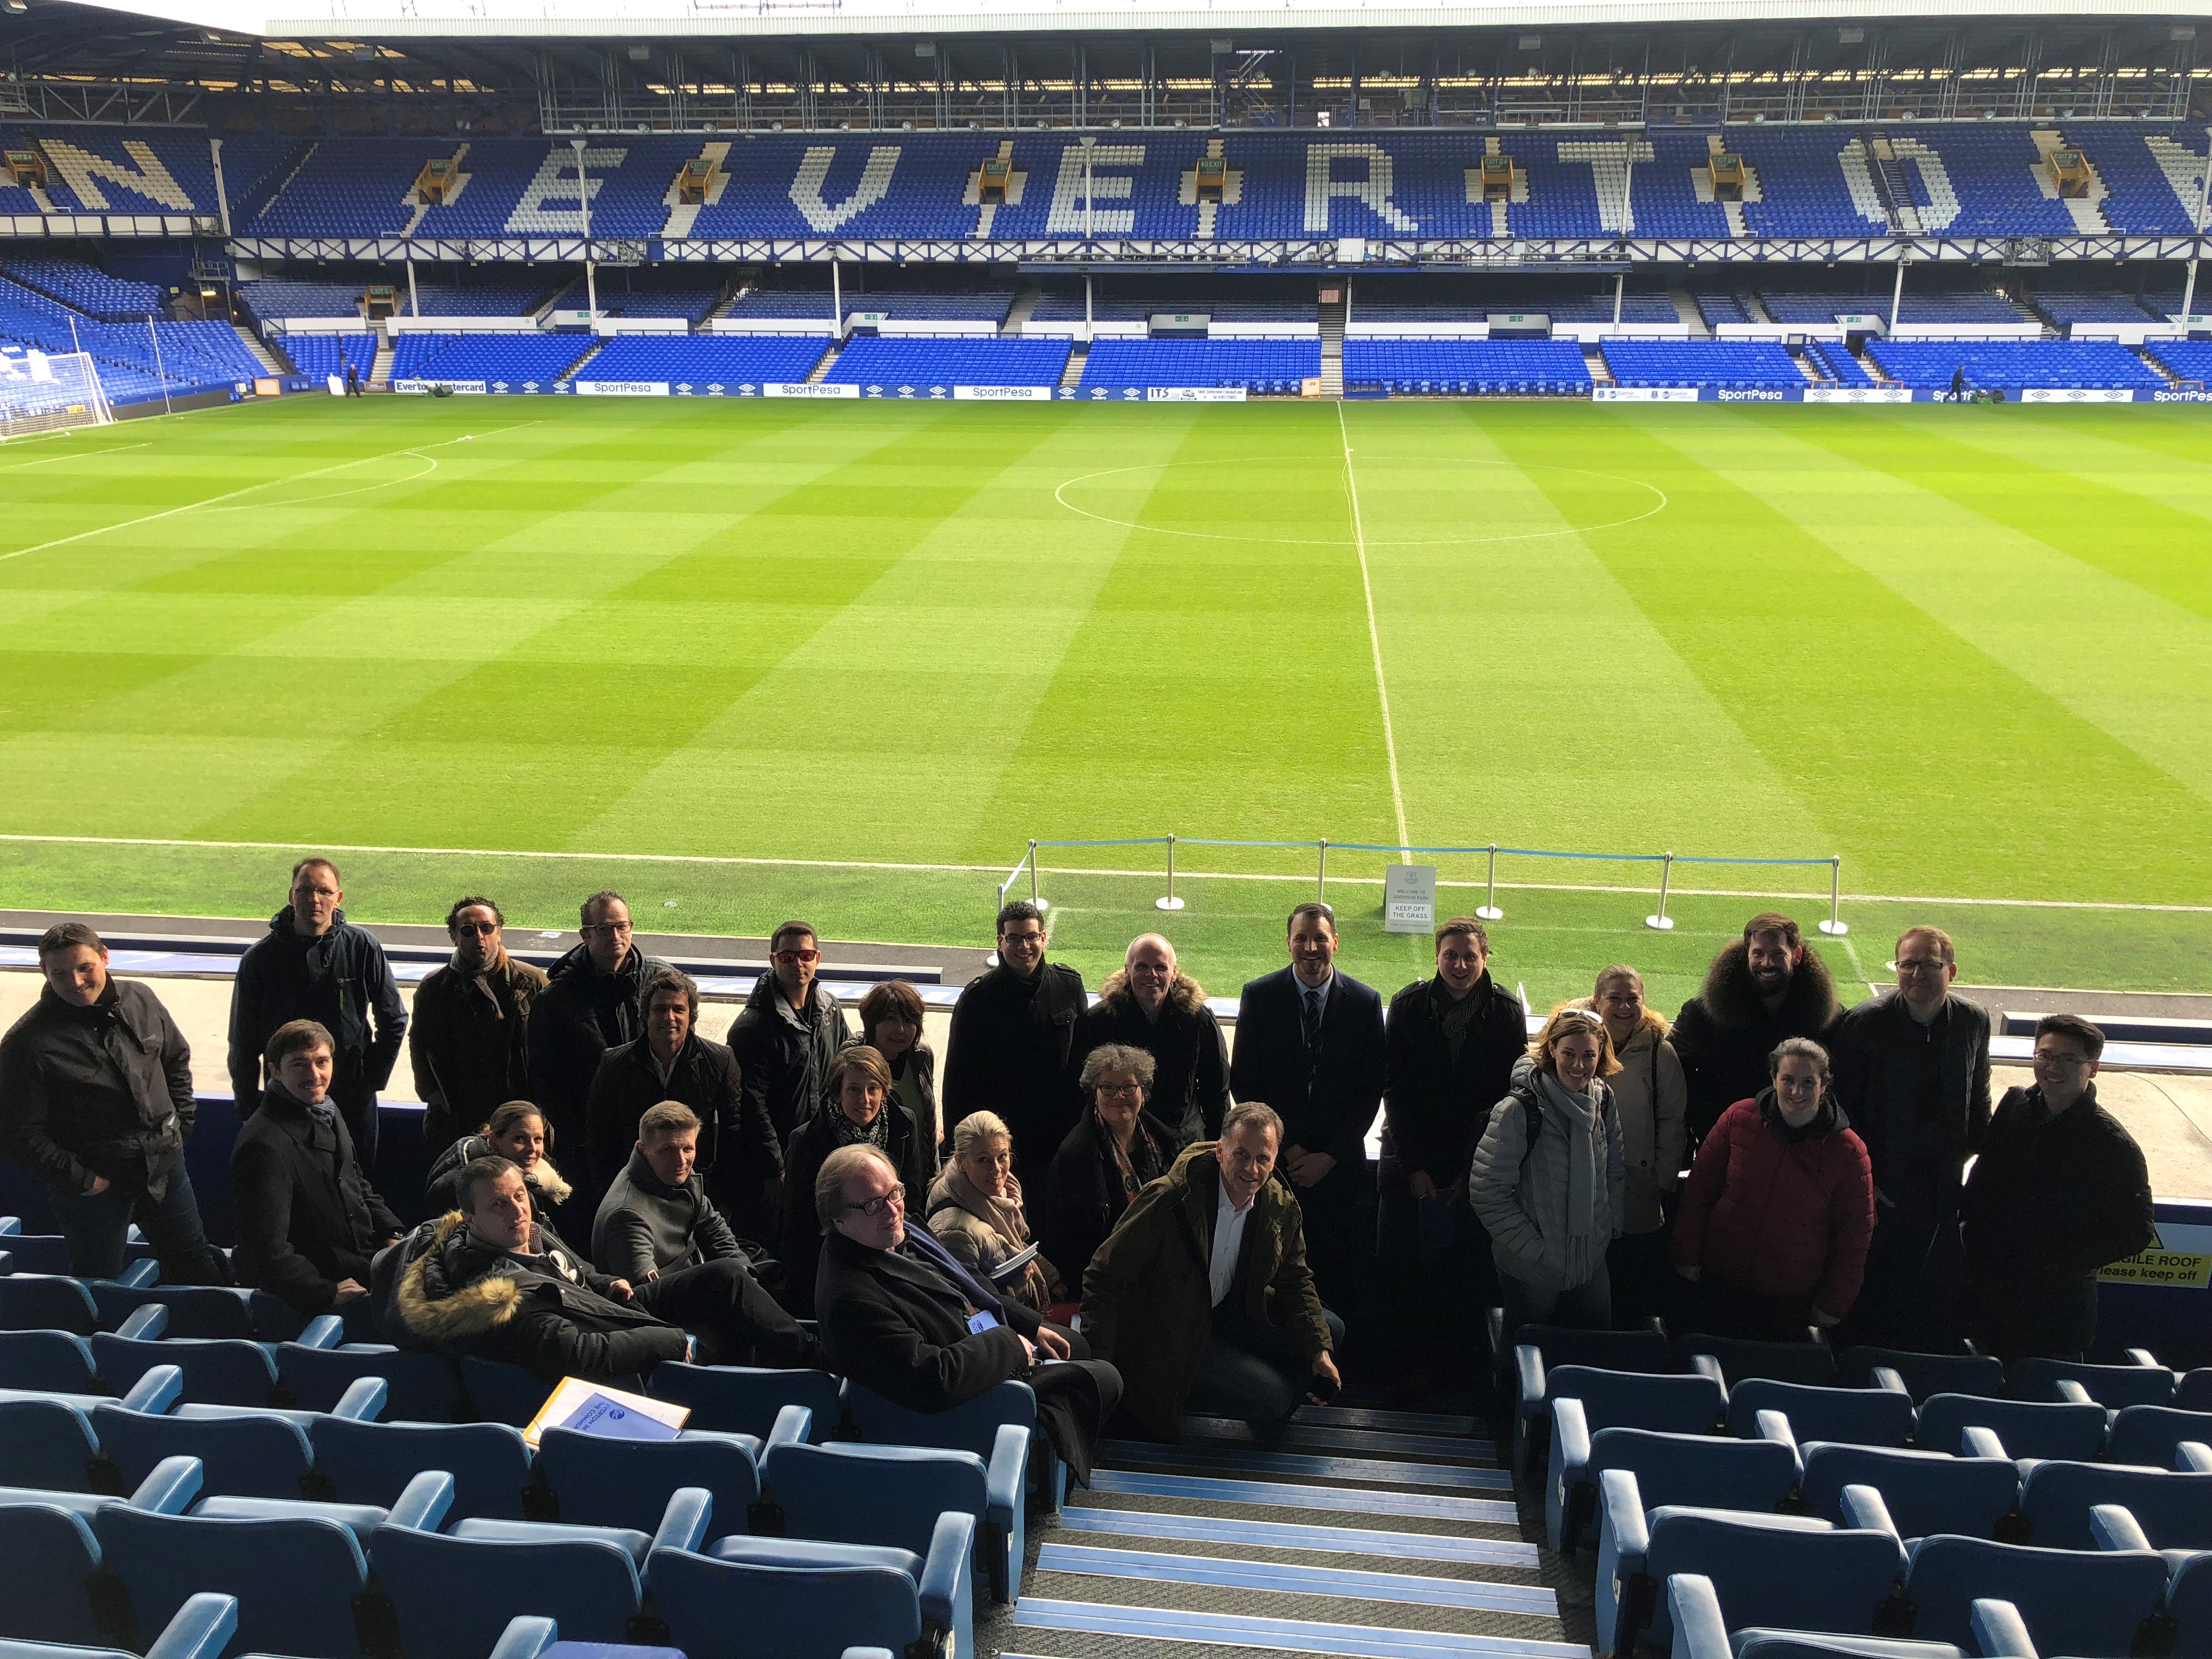 Workshop participants standing in the Everton stadium